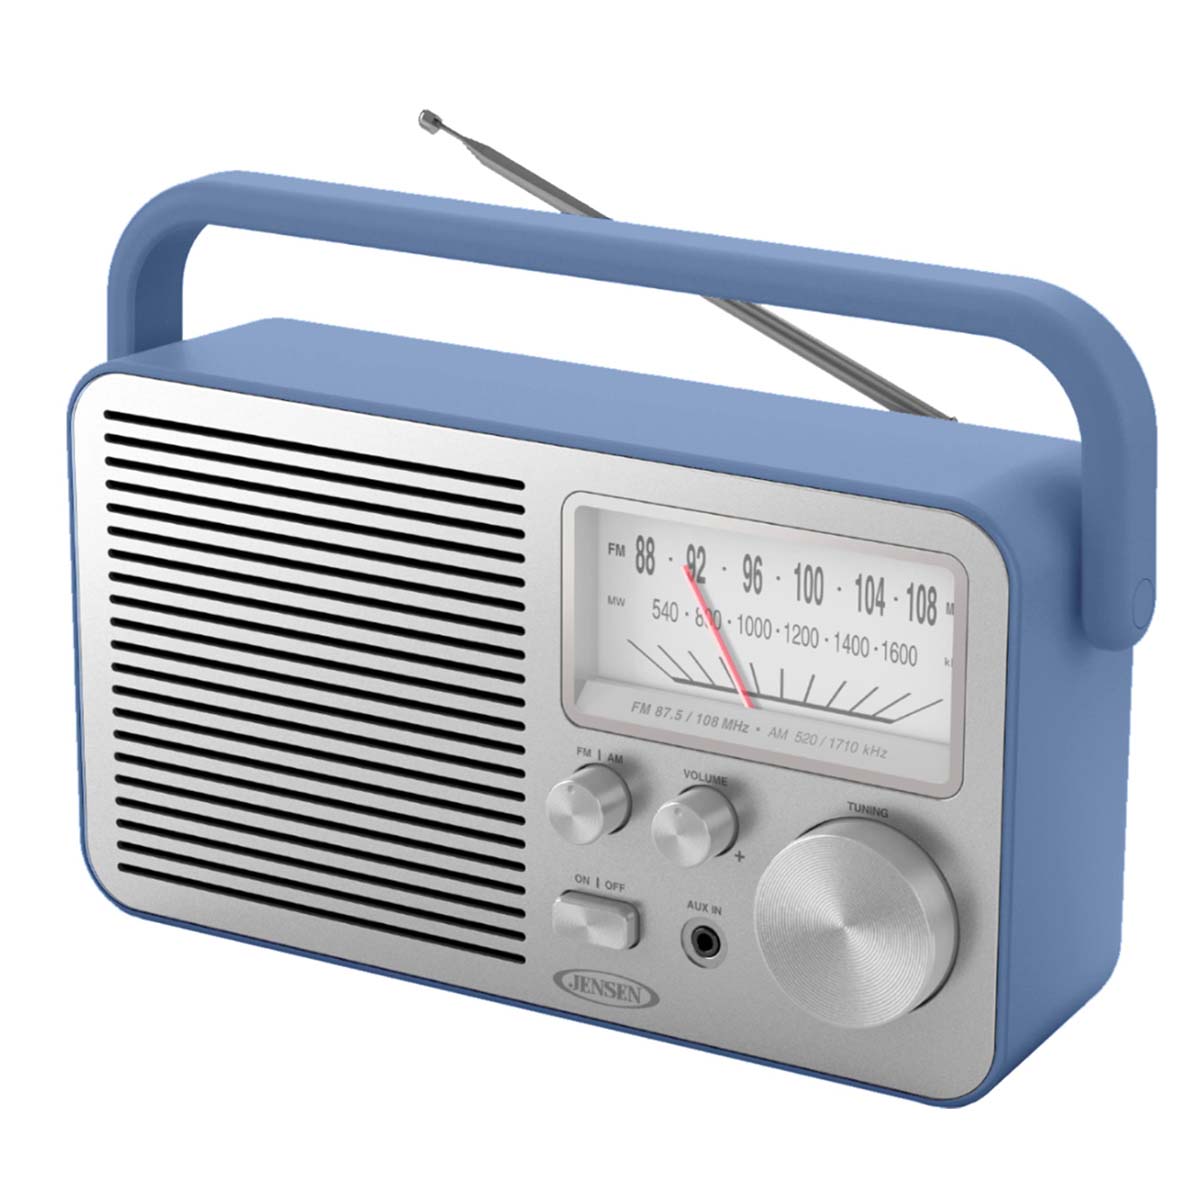 
                  
                    Jensen Audio Portable AM/FM Radio
                  
                